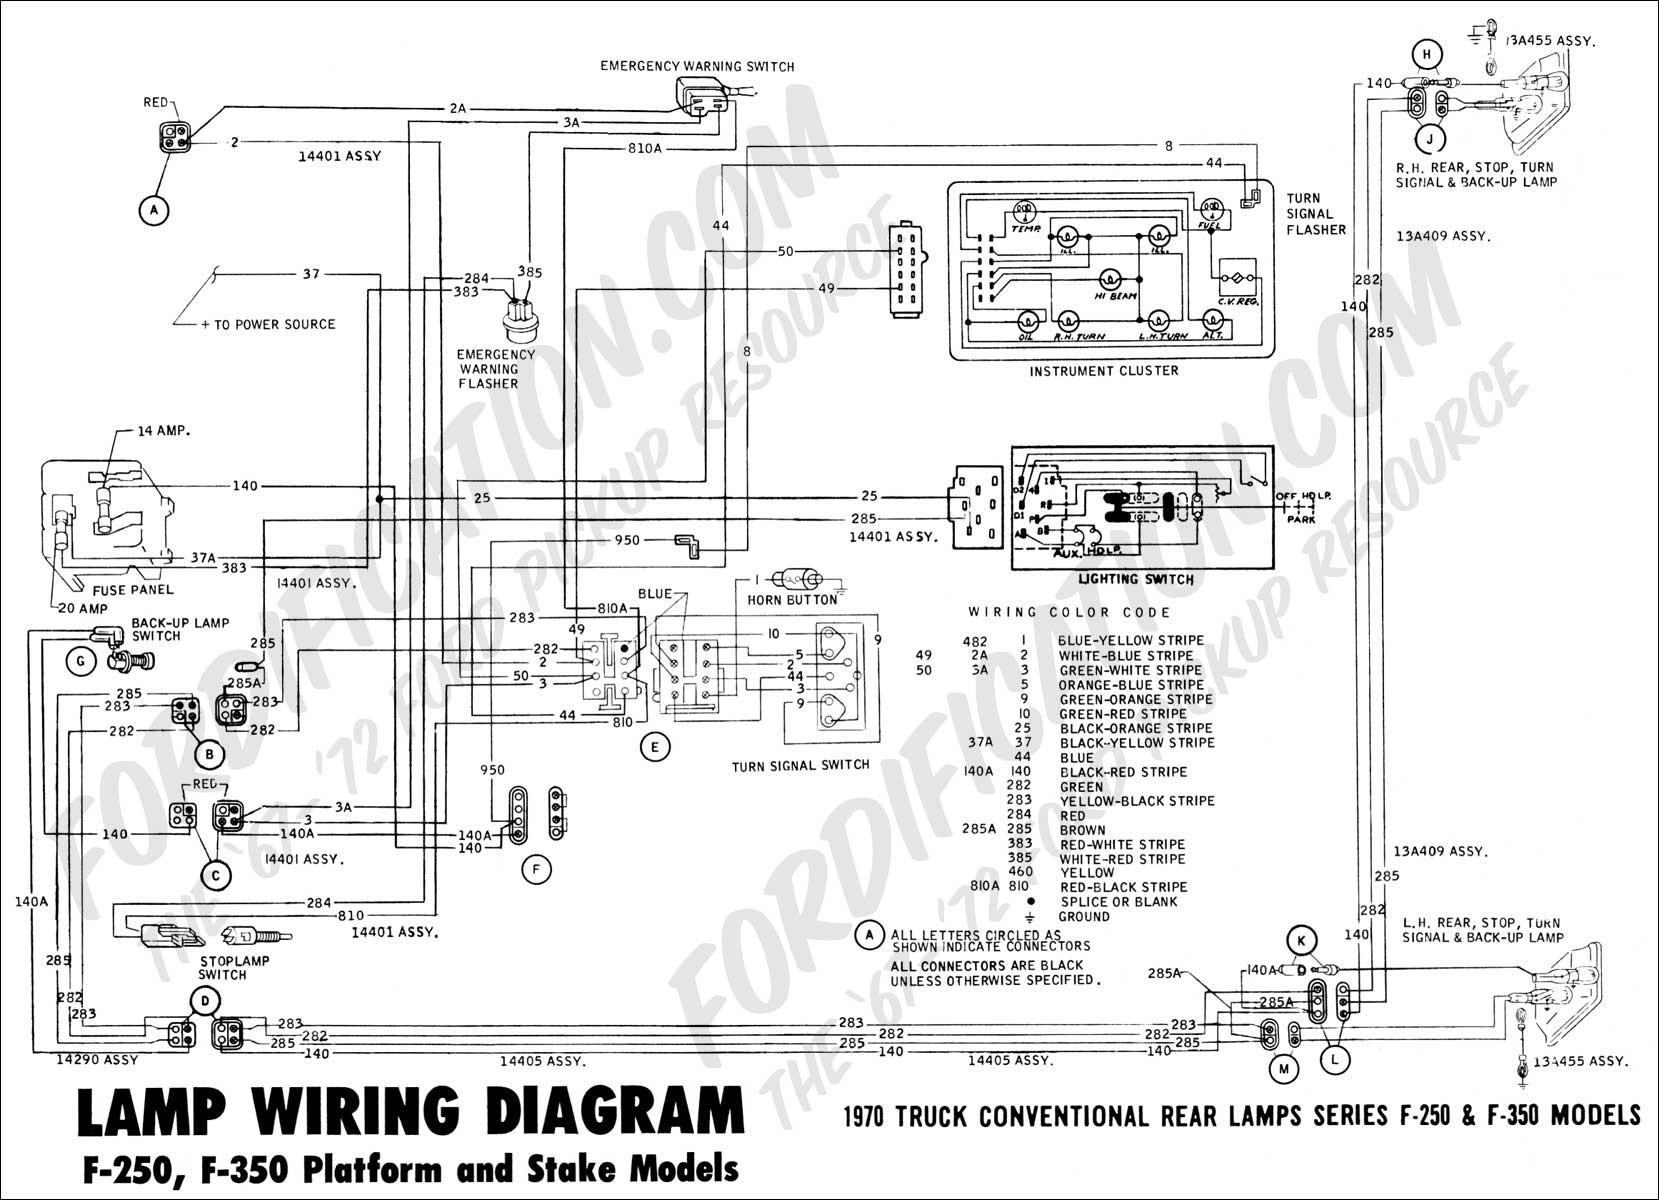 Ford Truck Wiring Diagrams Elegant Brake Light Wiring Diagram Diagram Of Ford Truck Wiring Diagrams